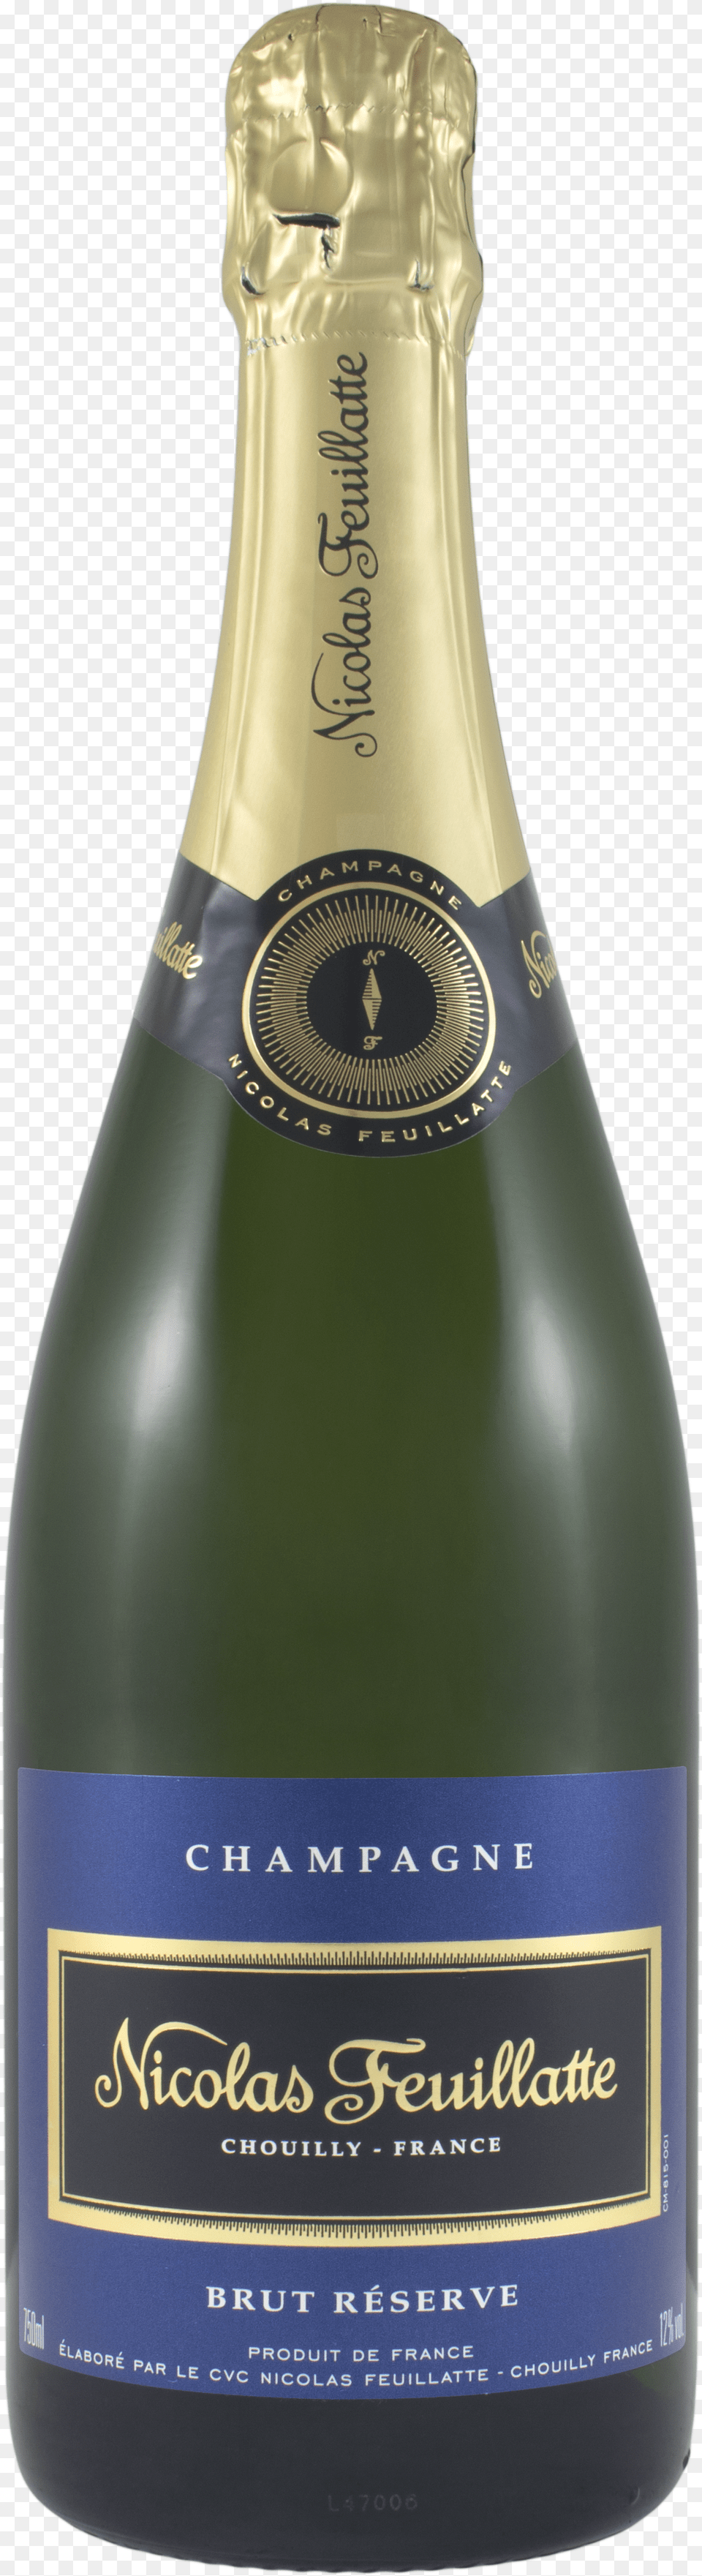 Gold Champagne Bottle Png Image